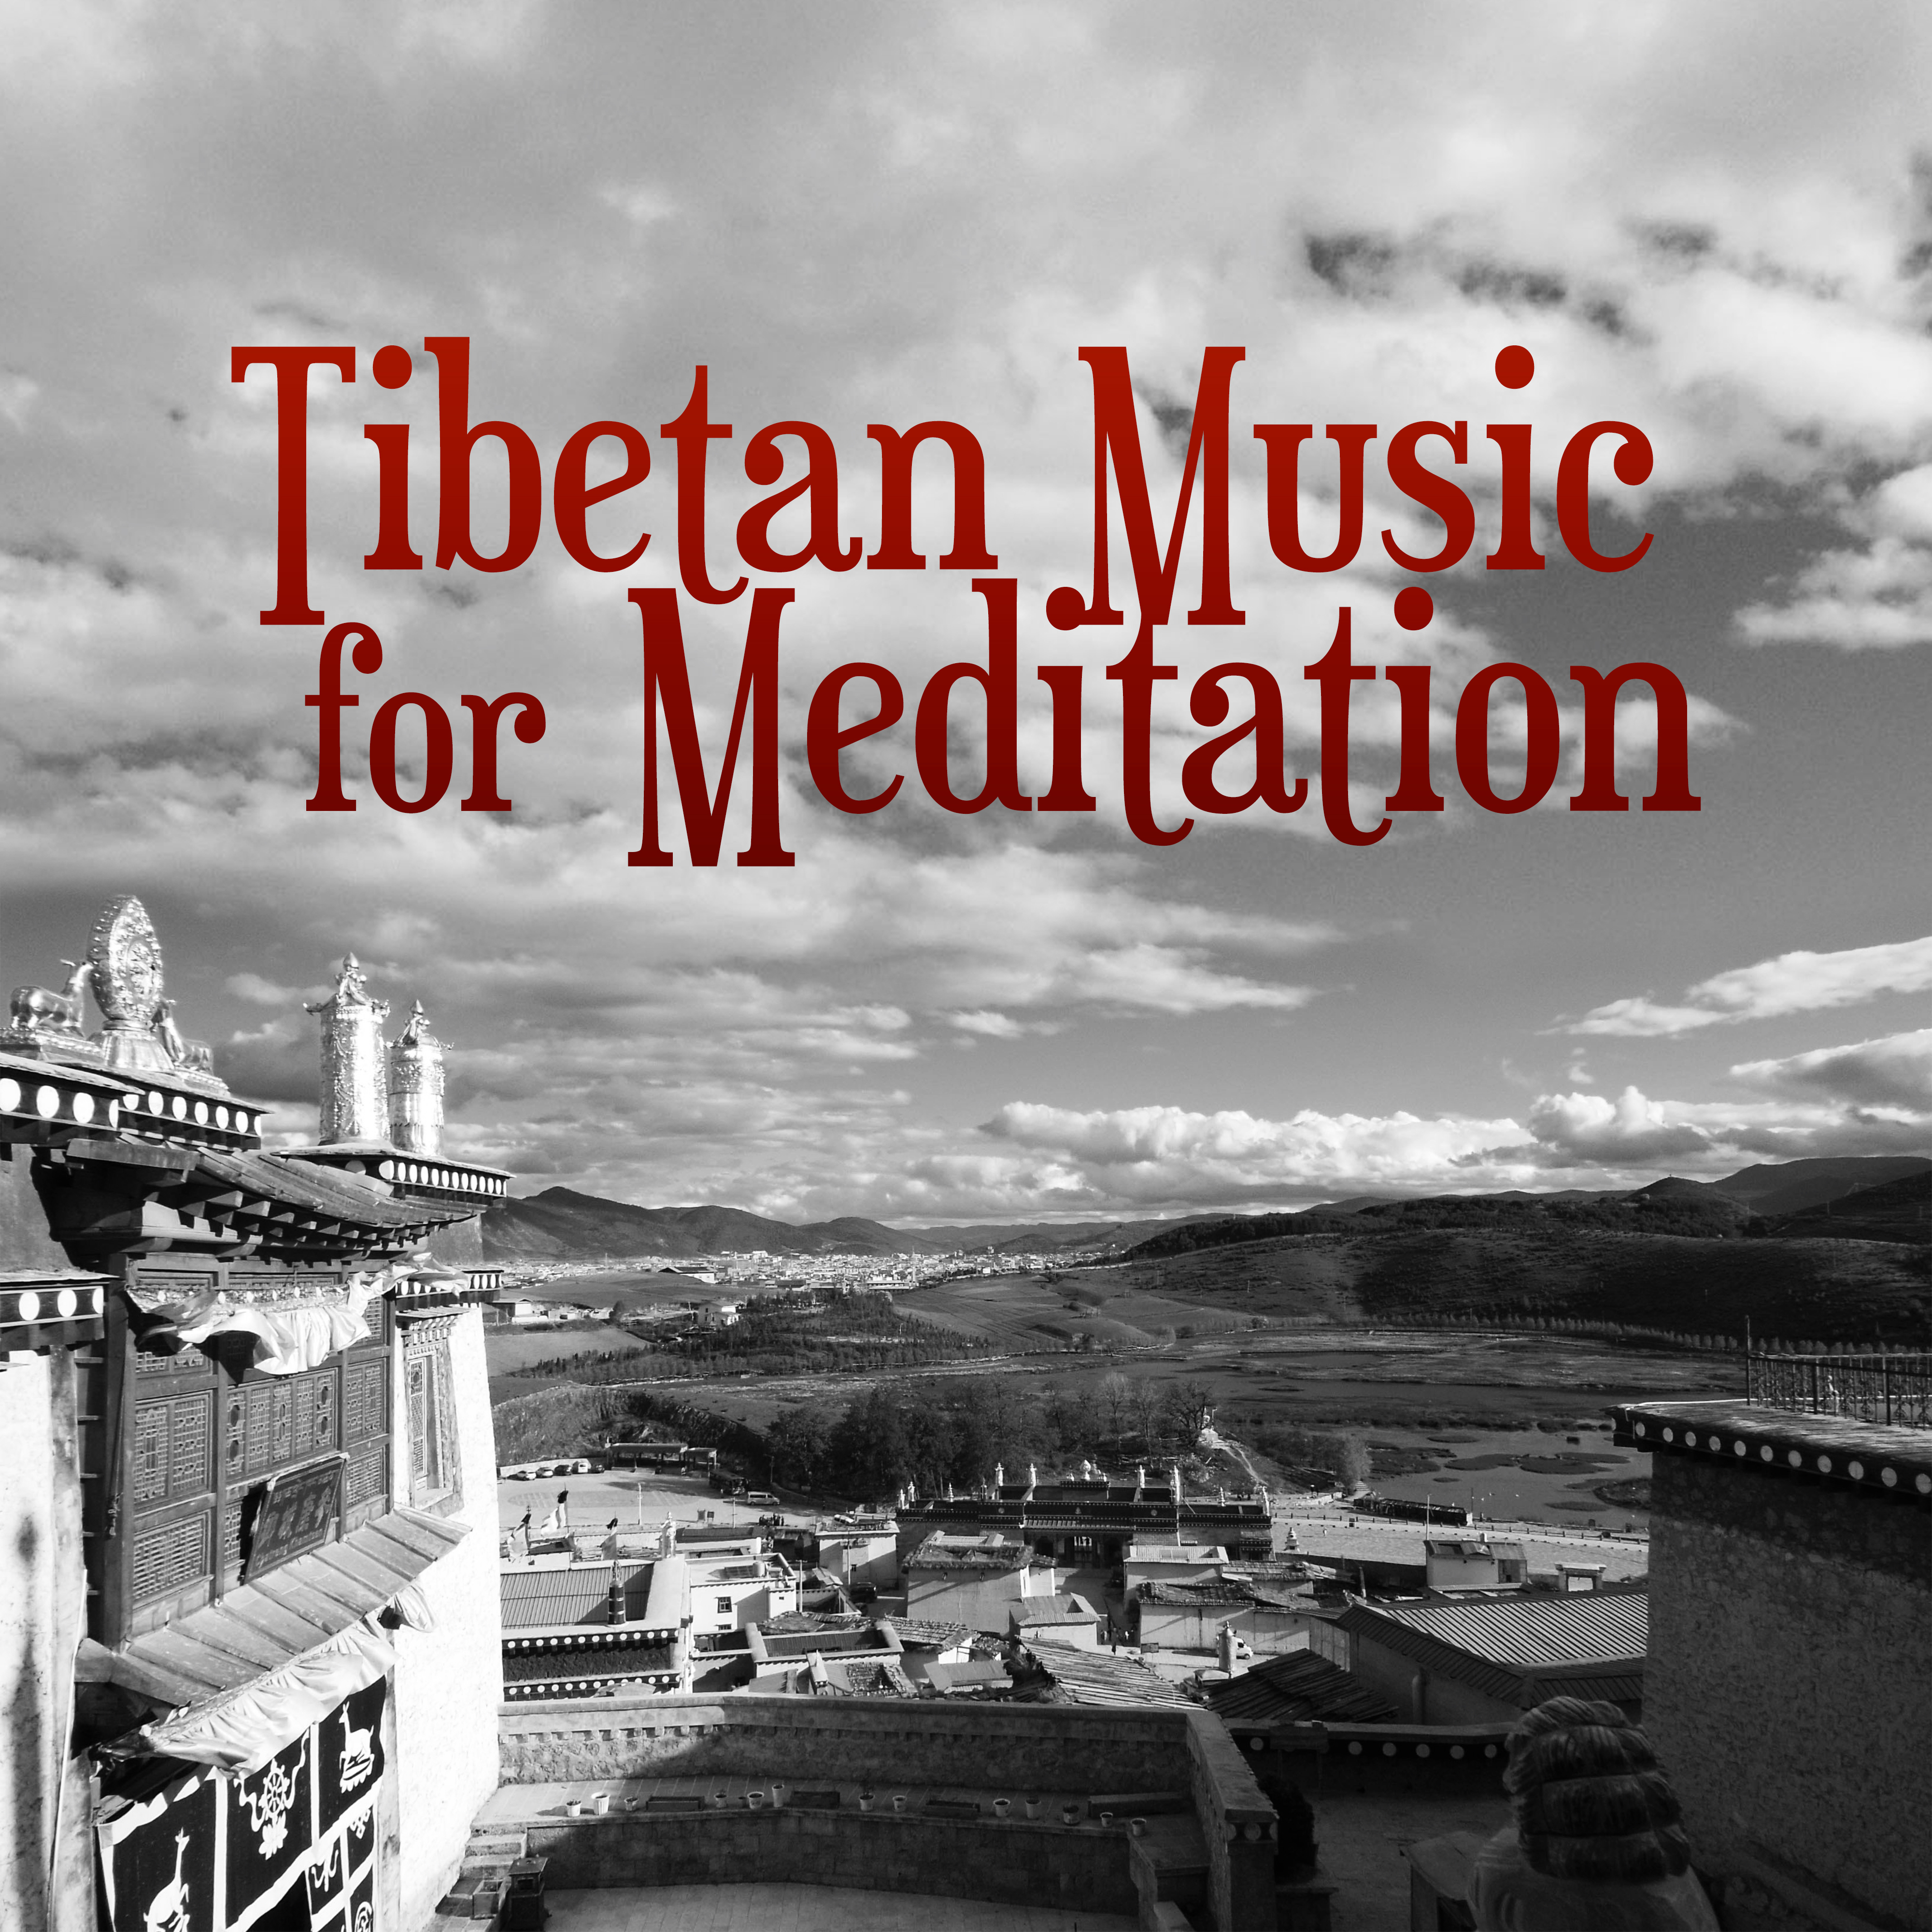 Tibetan Music for Meditation  Training Yoga, Soft Nature Sounds for Concentration, Inner Zen